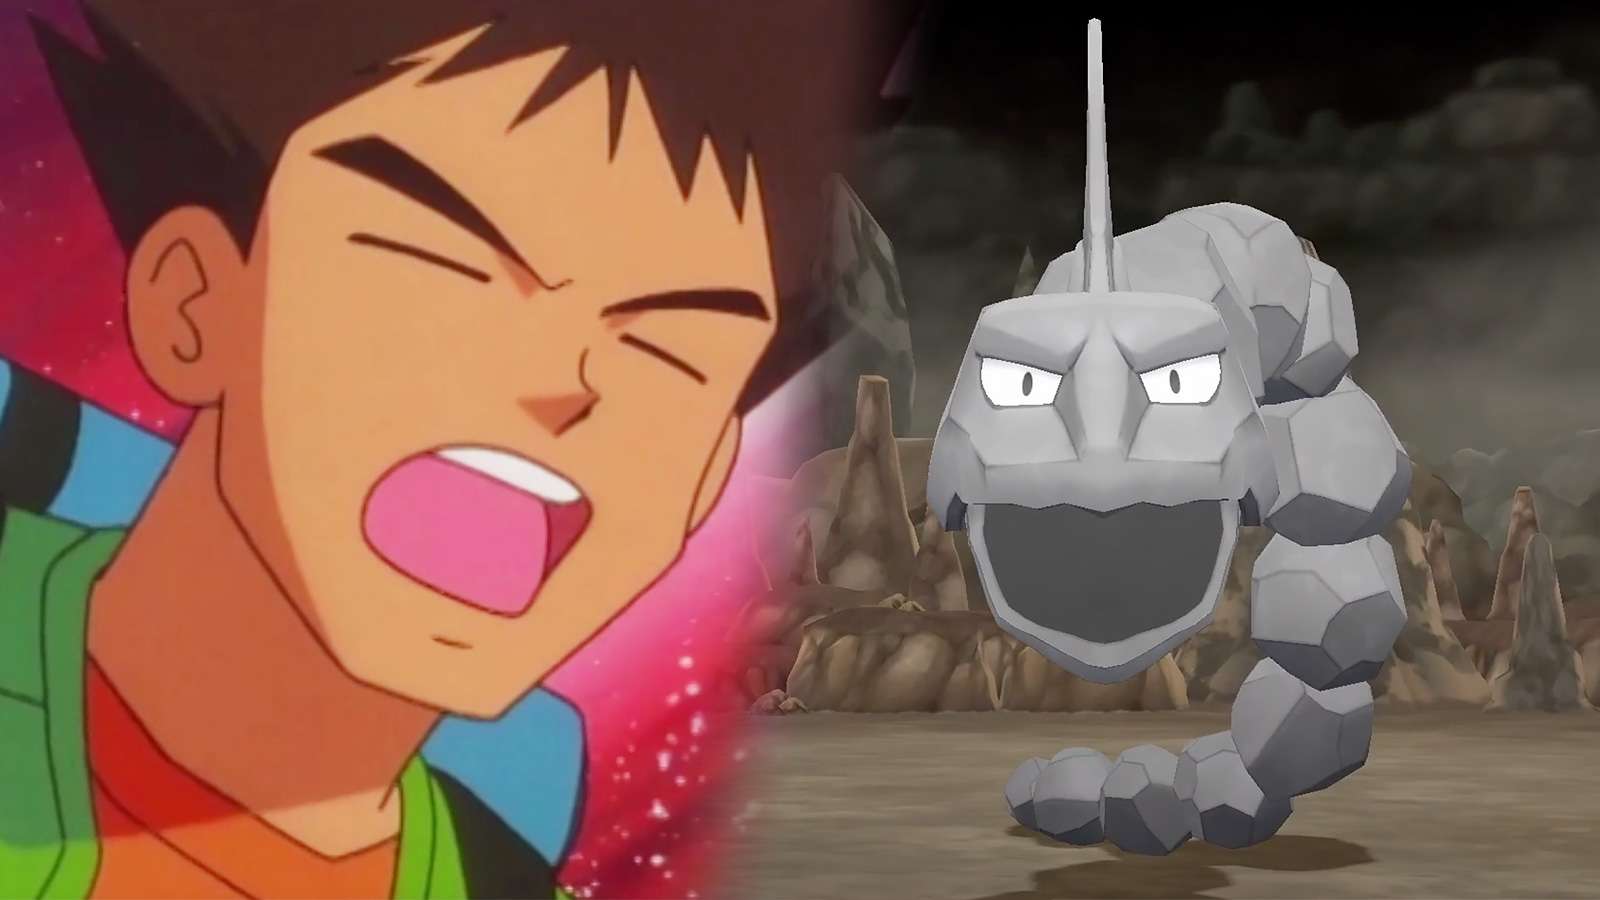 Screenshot of Brock from Pokemon anime next to Onix from Pokemon Lets Go Pikachu.